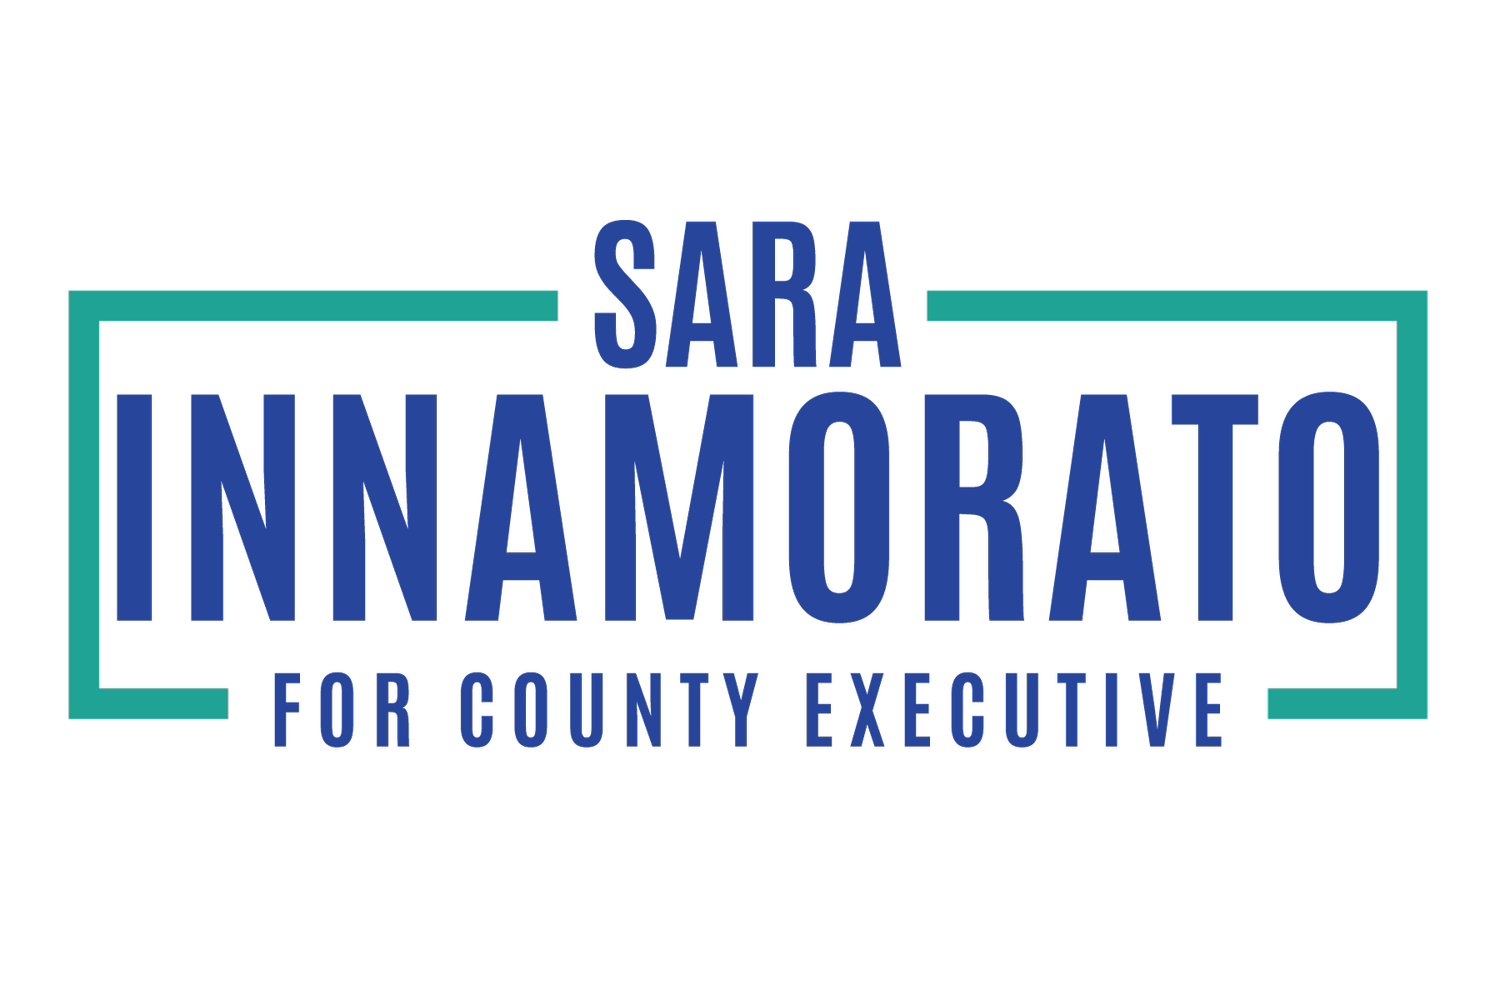 Sara Innamorato for County Executive